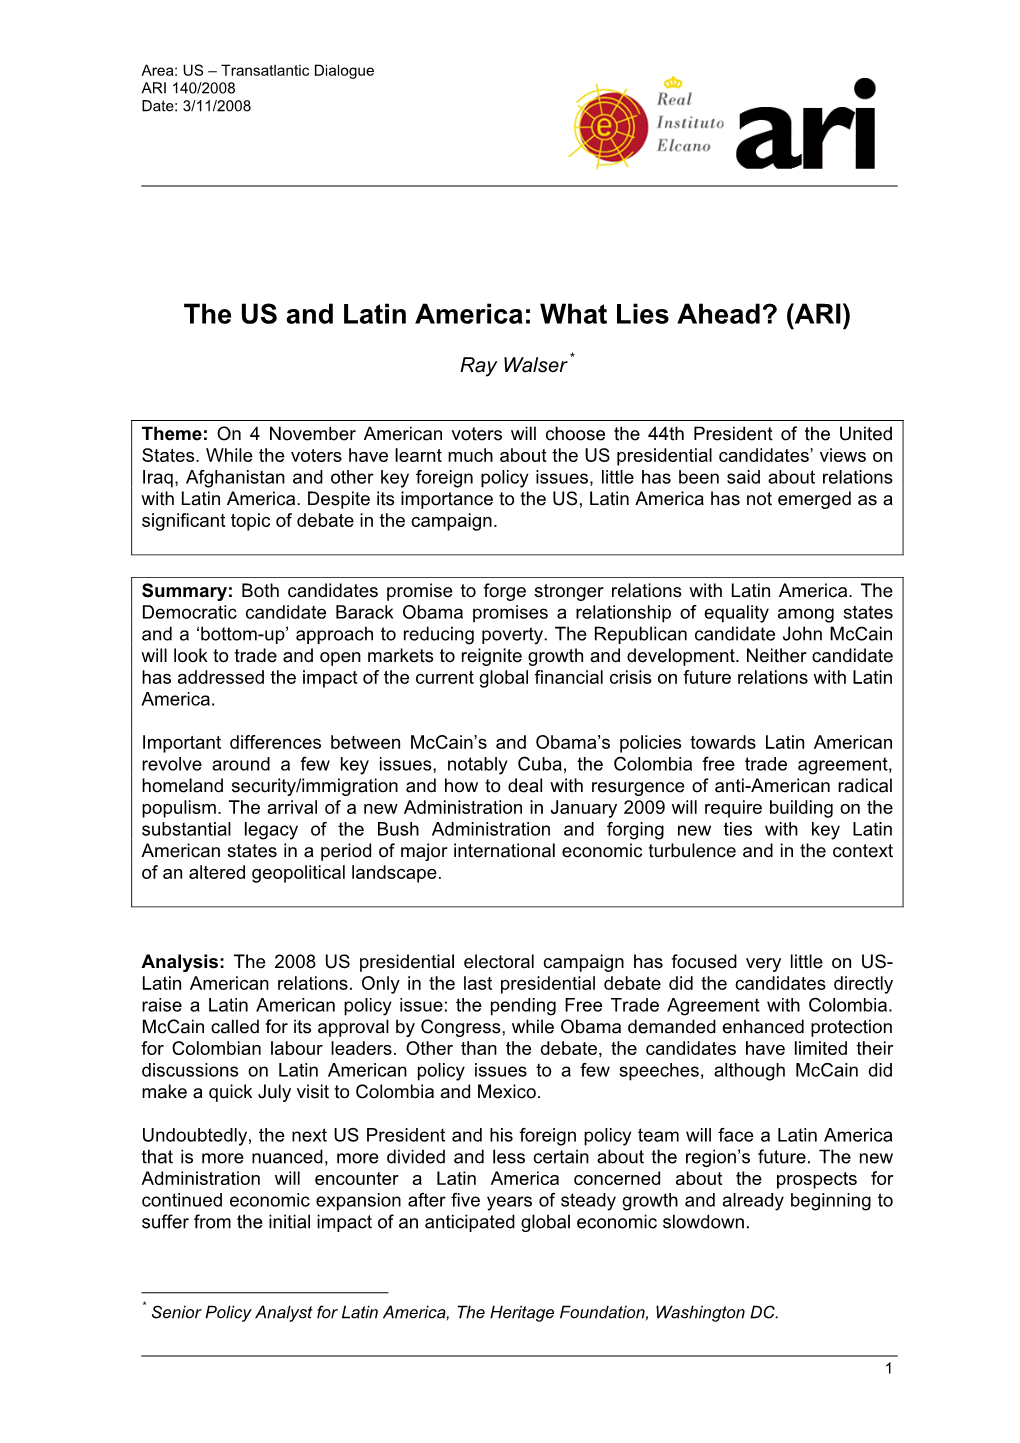 The US and Latin America: What Lies Ahead? (ARI)